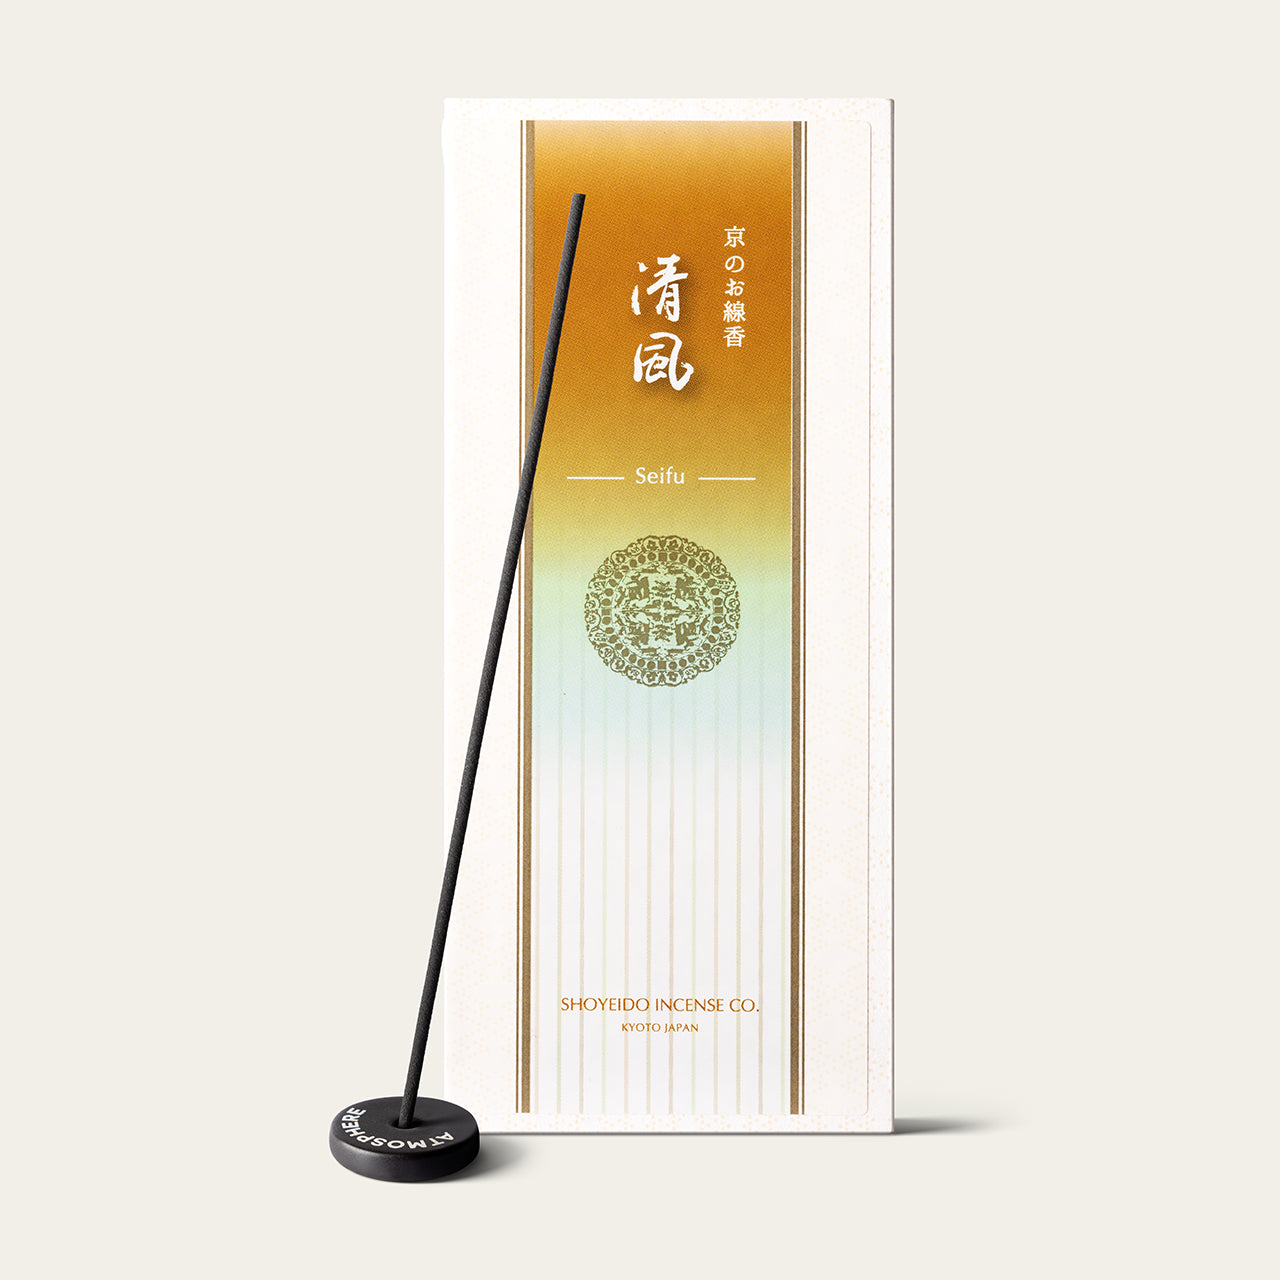 Shoyeido Daily Fresh Breeze Seifu Japanese incense sticks (165 sticks) with Atmosphere ceramic incense holder